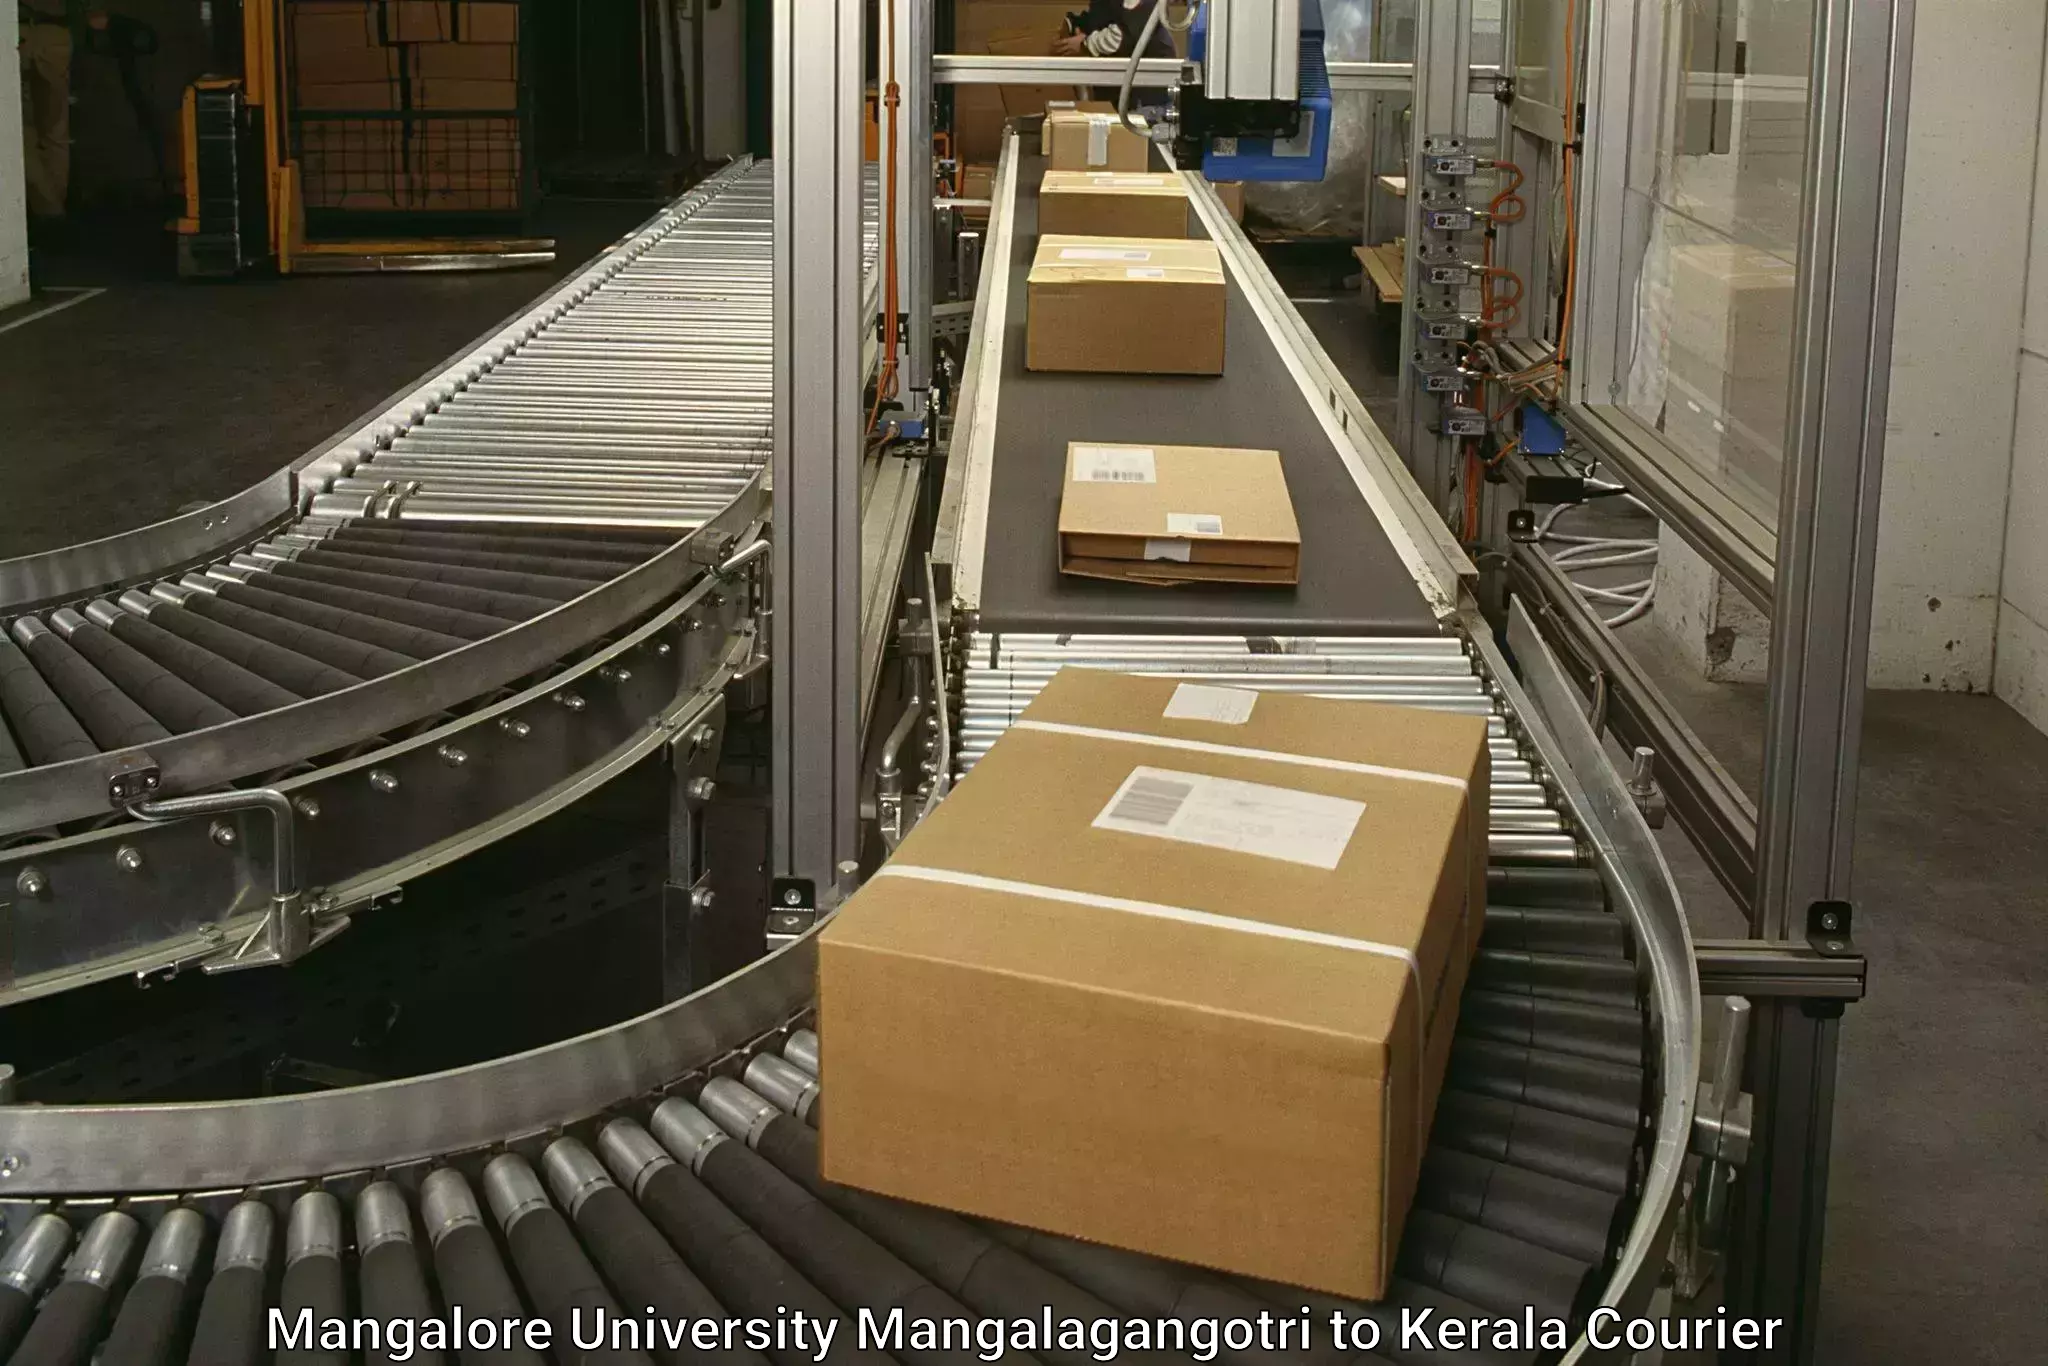 Express postal services Mangalore University Mangalagangotri to Kerala